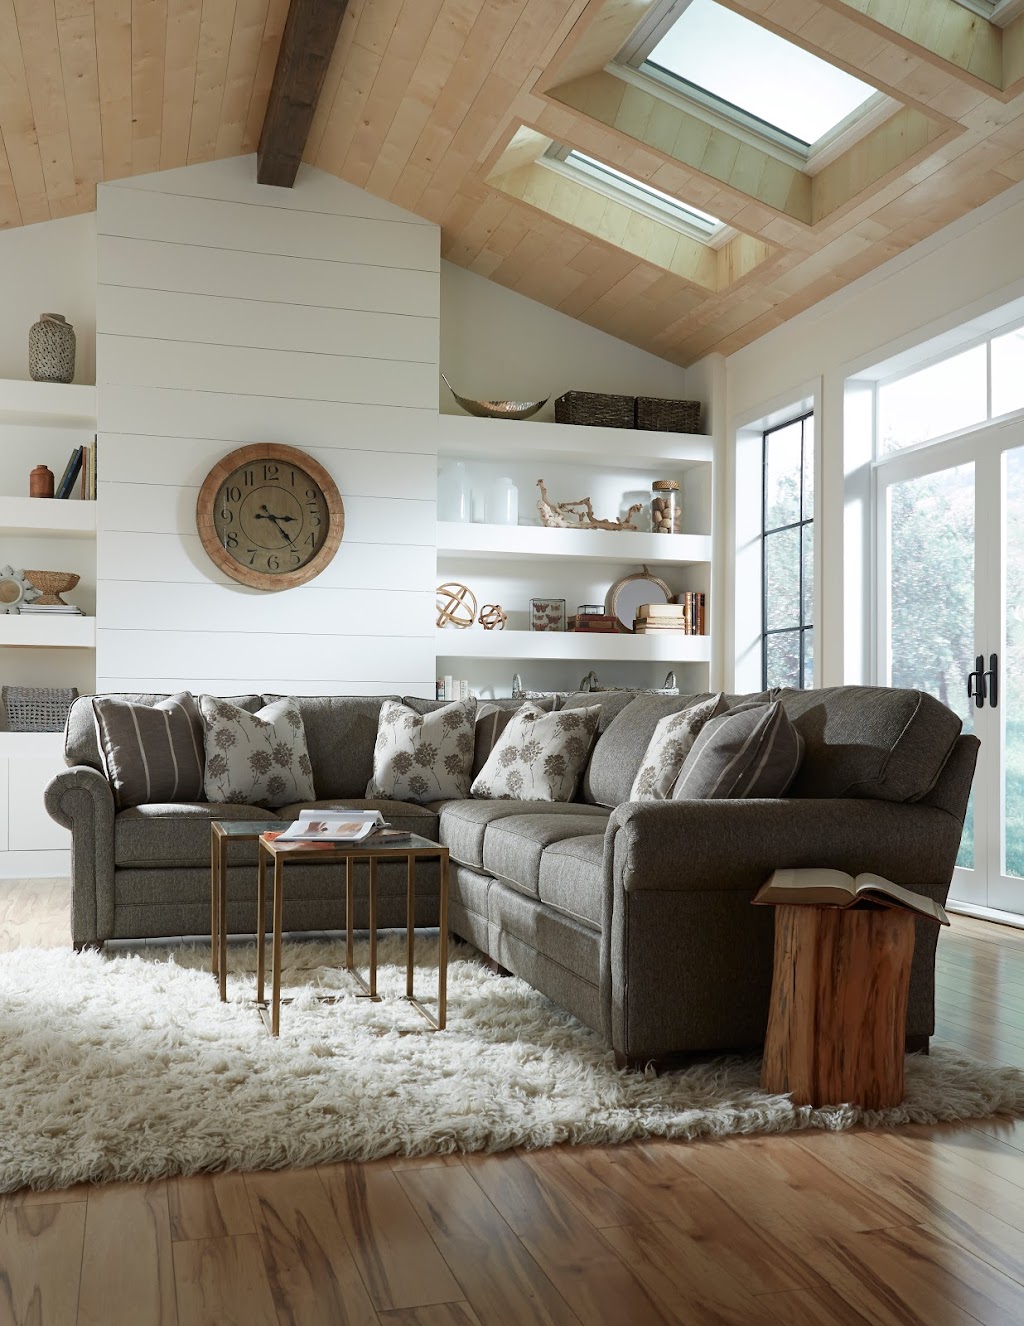 Bejnars Fine Furniture | 5665 Auburn Rd, Shelby Township, MI 48317, USA | Phone: (586) 731-7171